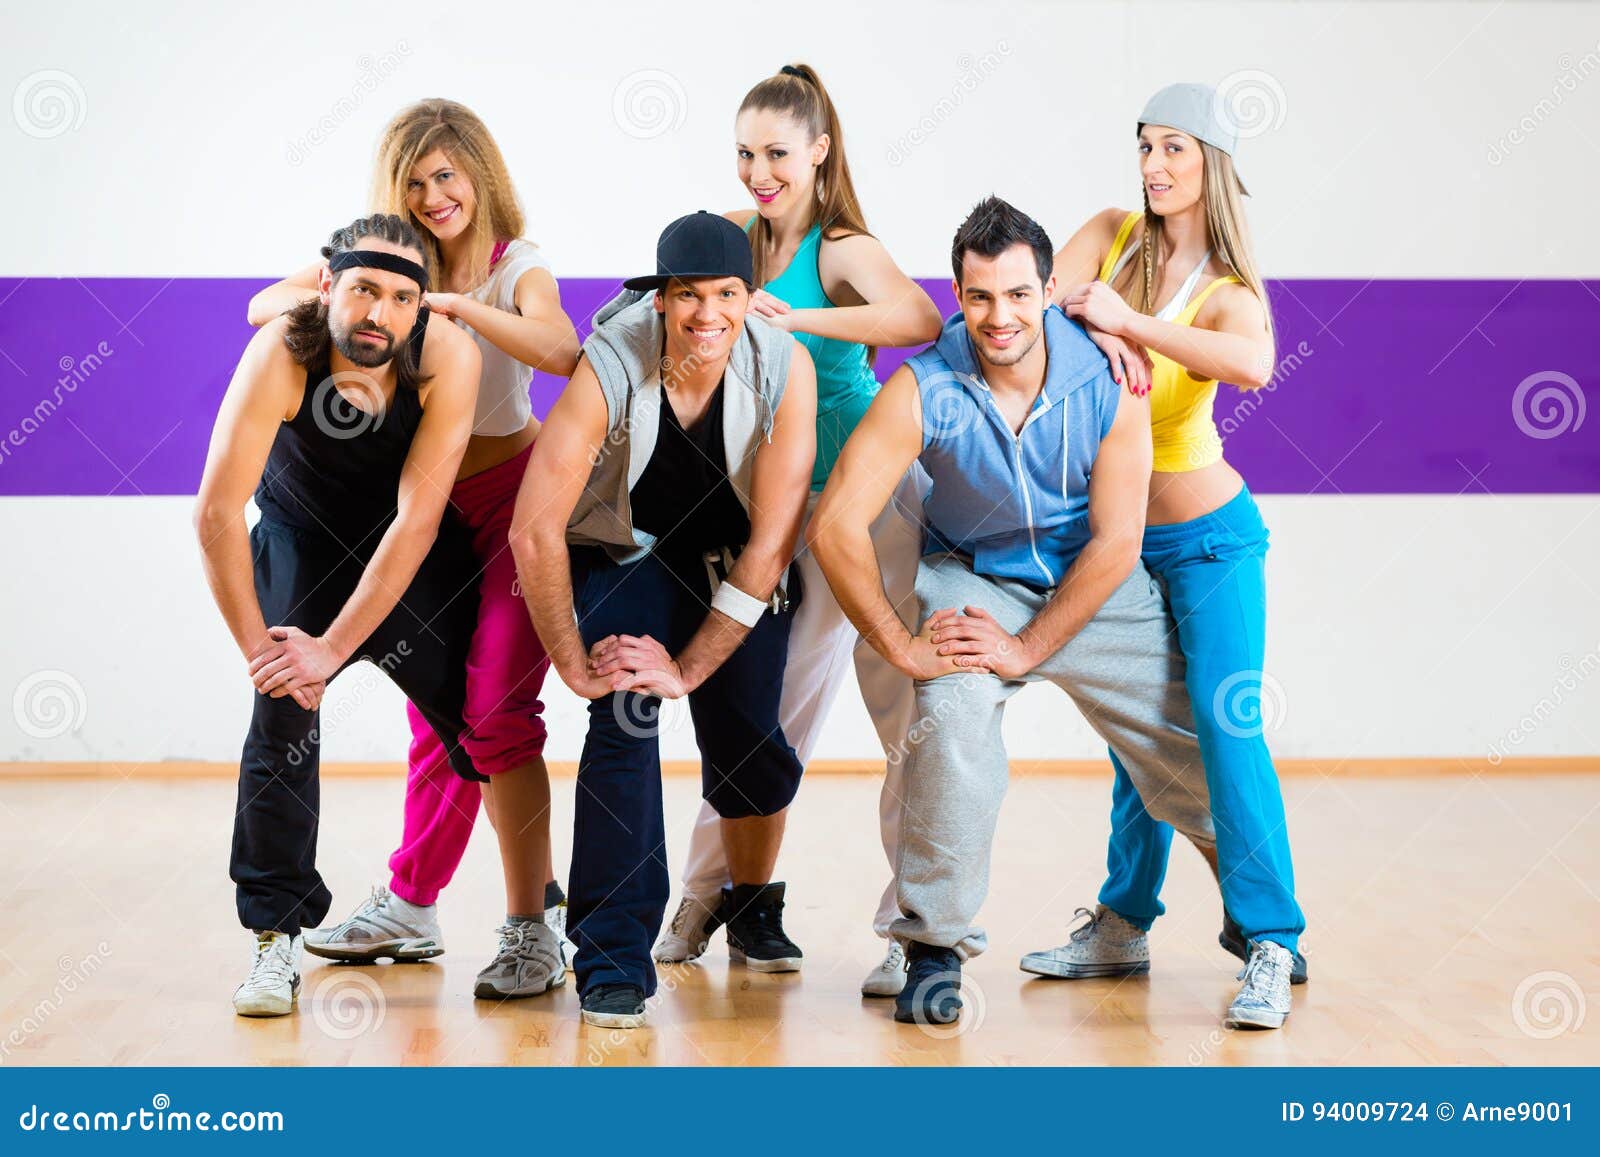 Dancer at Zumba Fitness Training in Dance Studio Stock Photo - Image of ...